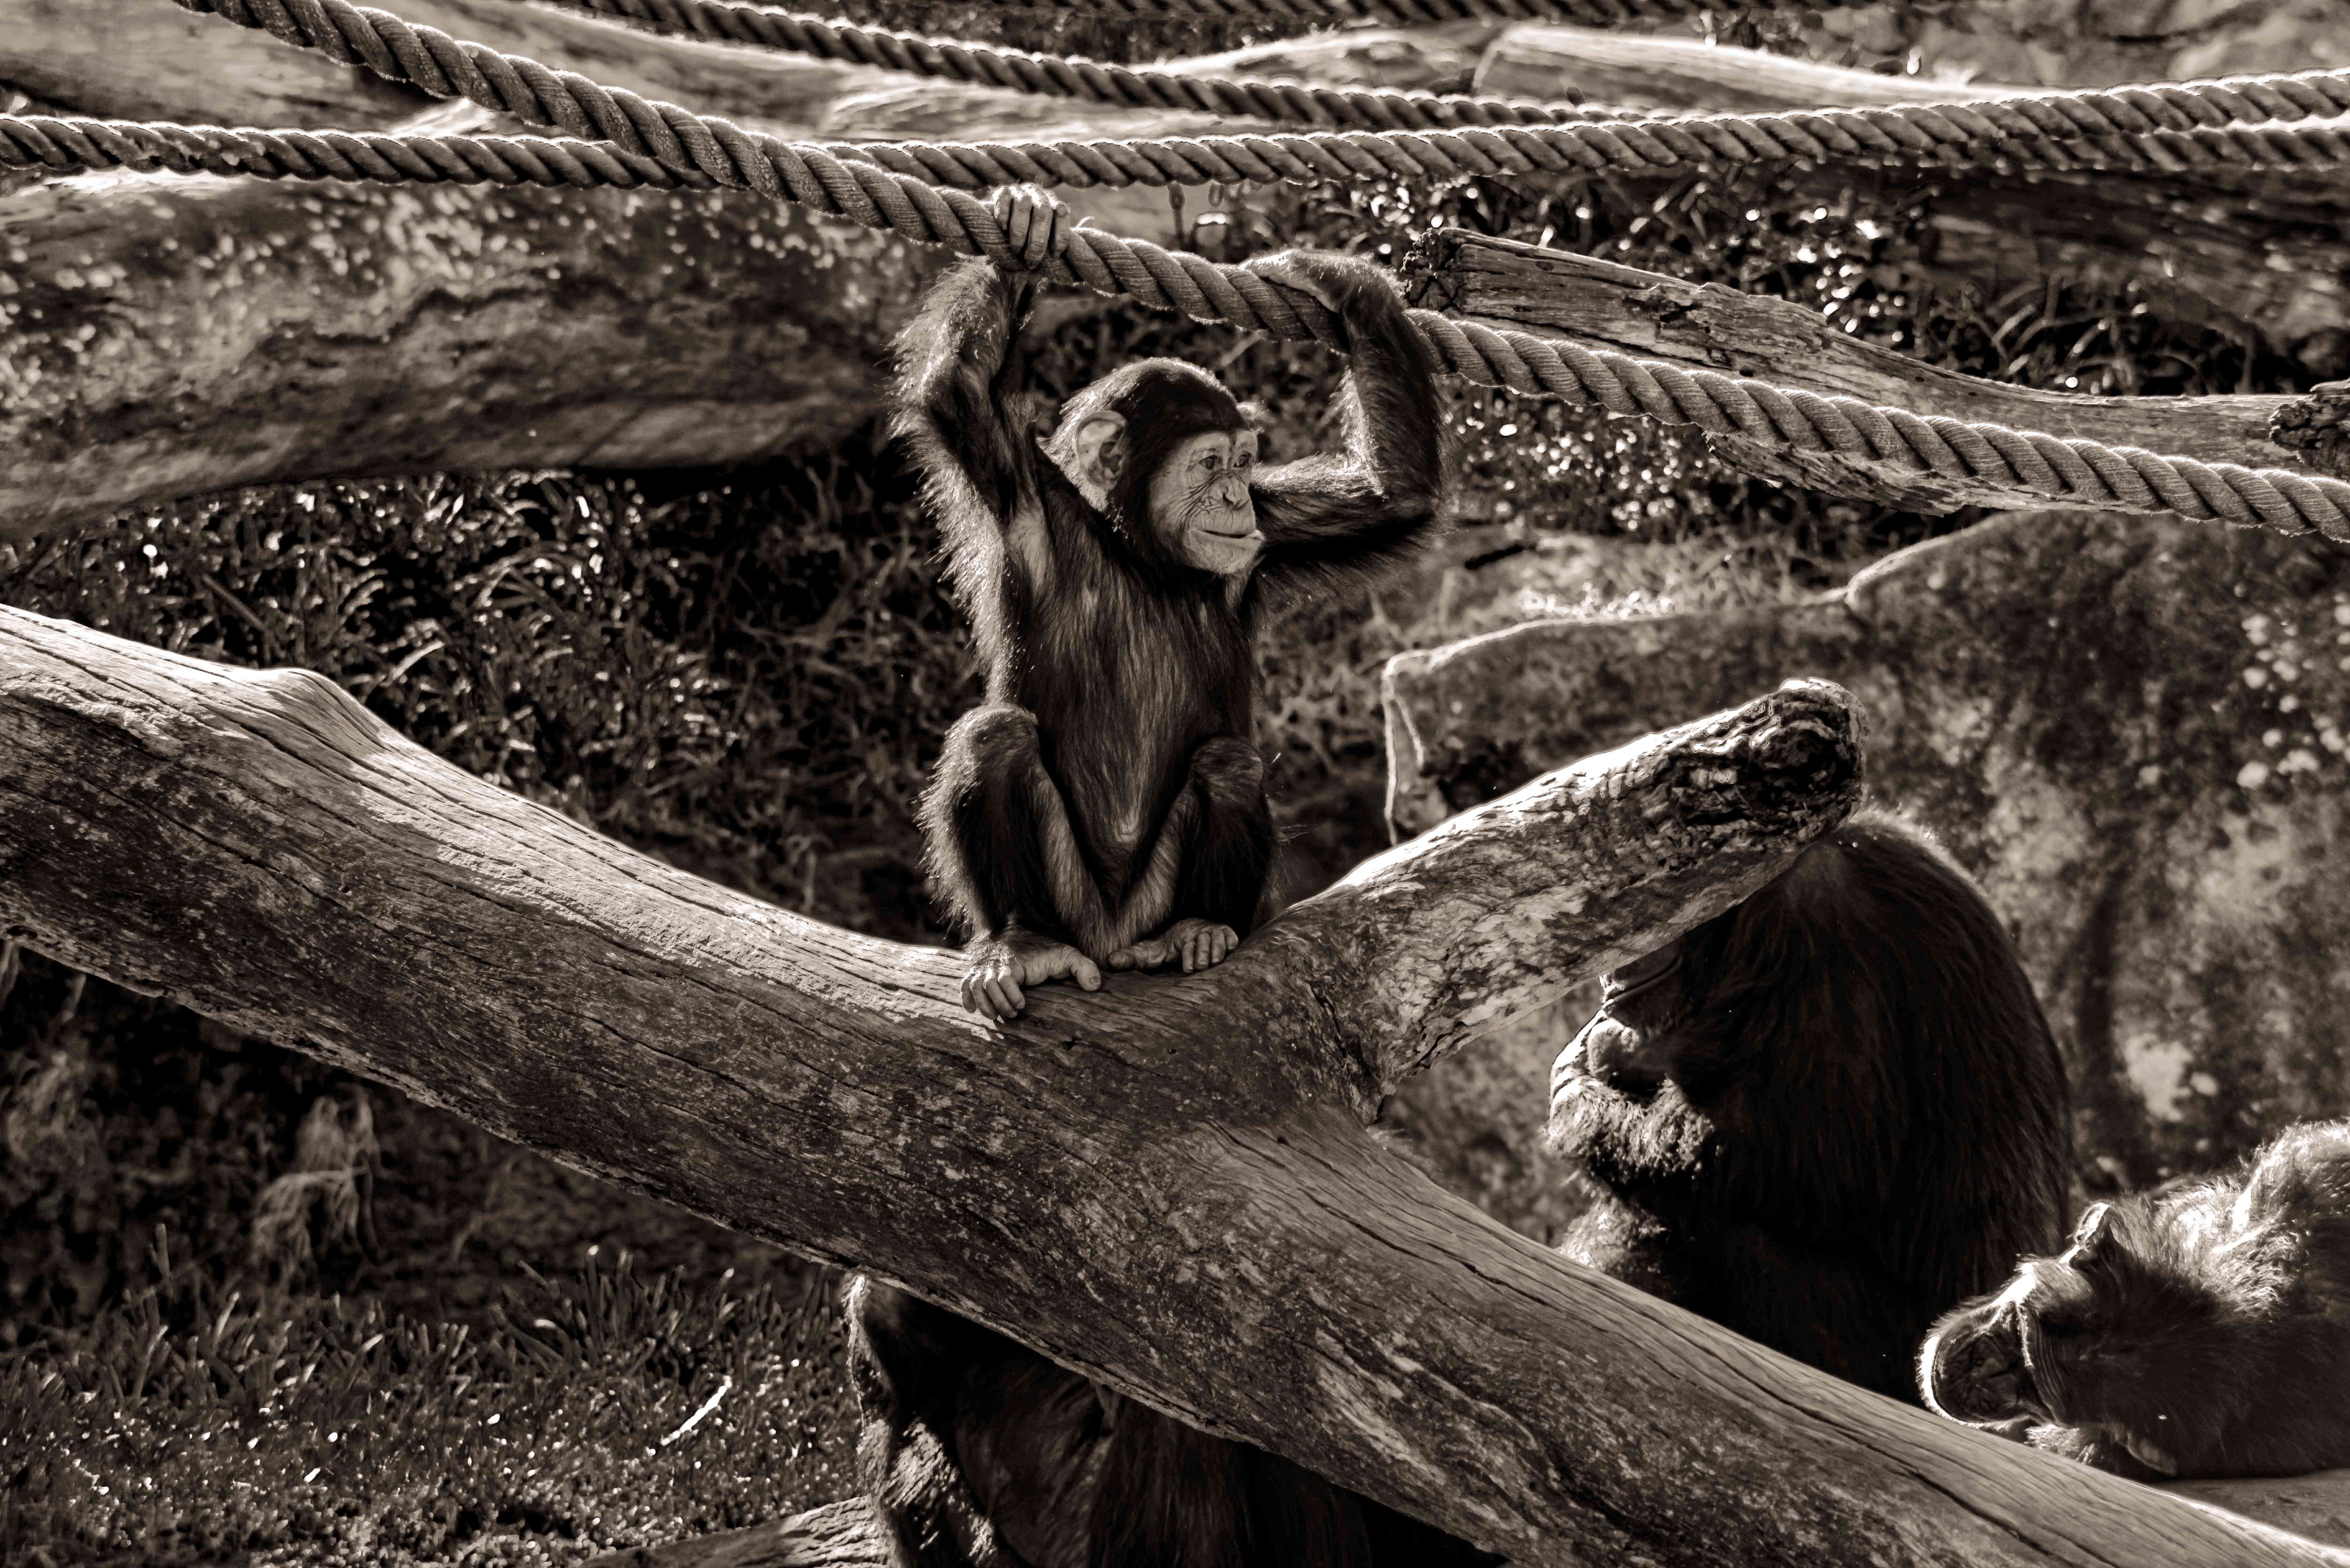 SEMD194 - DSC_7377 Sepia - 
Chimpanzee, Taronga Zoo,  Sydney, NSW, Australia.
1st July 2020 - 11.39am
Camera - Nikon D800 
F8 - ISO 800 - 1/320 second - Focal Length 270mm : Wildlife - Sepia : Stephen E-Moran - Fine Art Photography